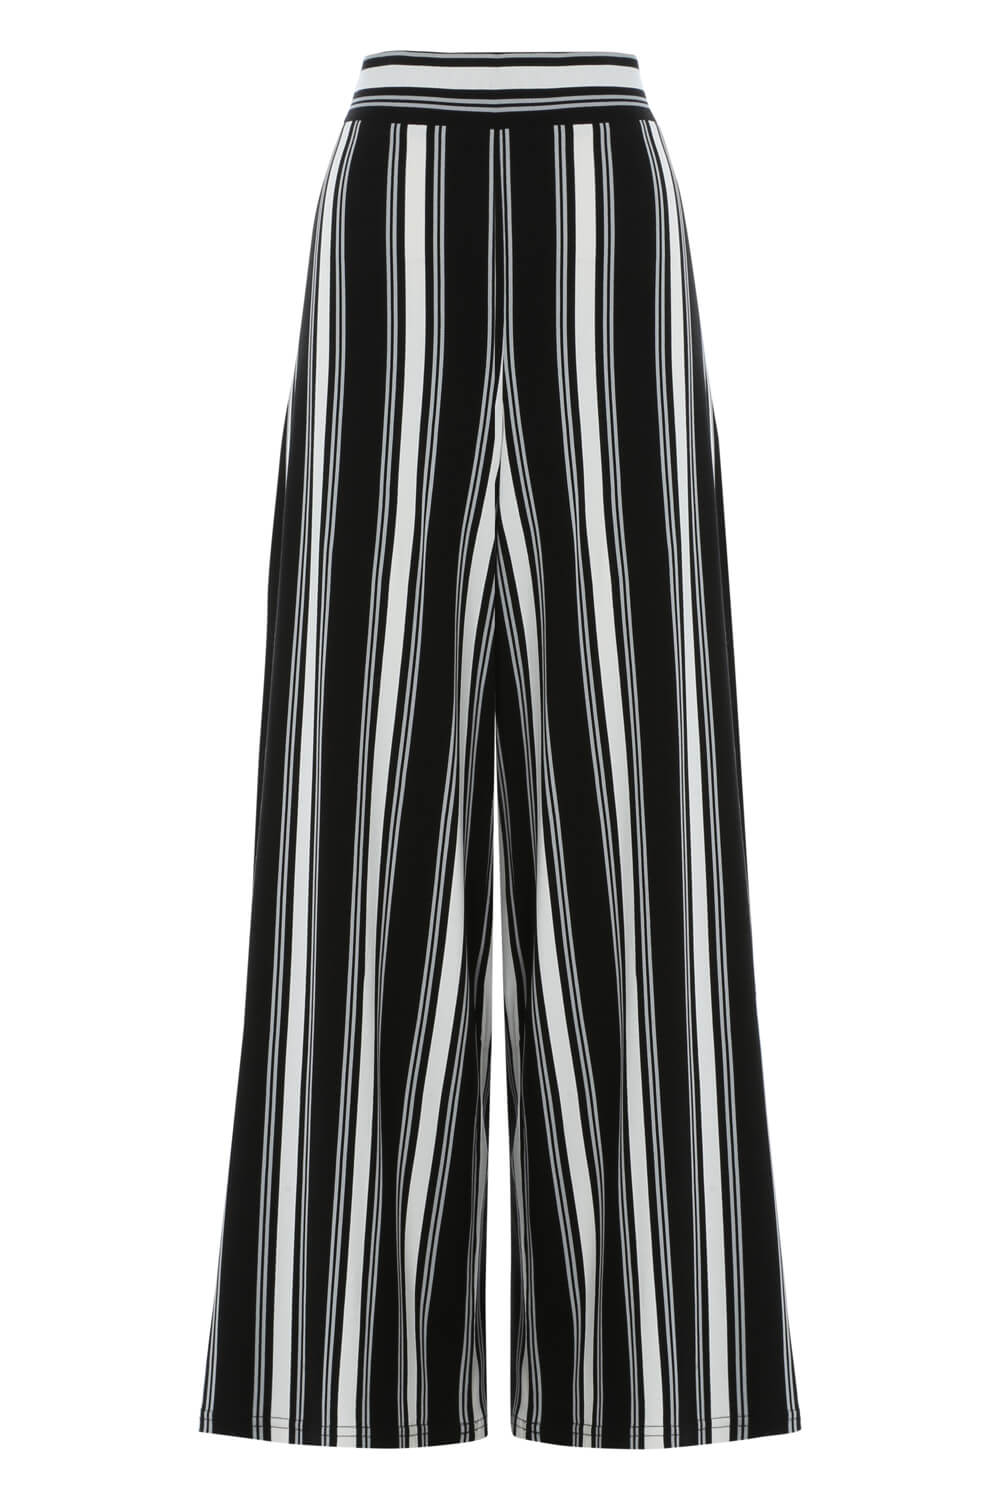 Stripe Wide Leg Trousers in Black - Roman Originals UK